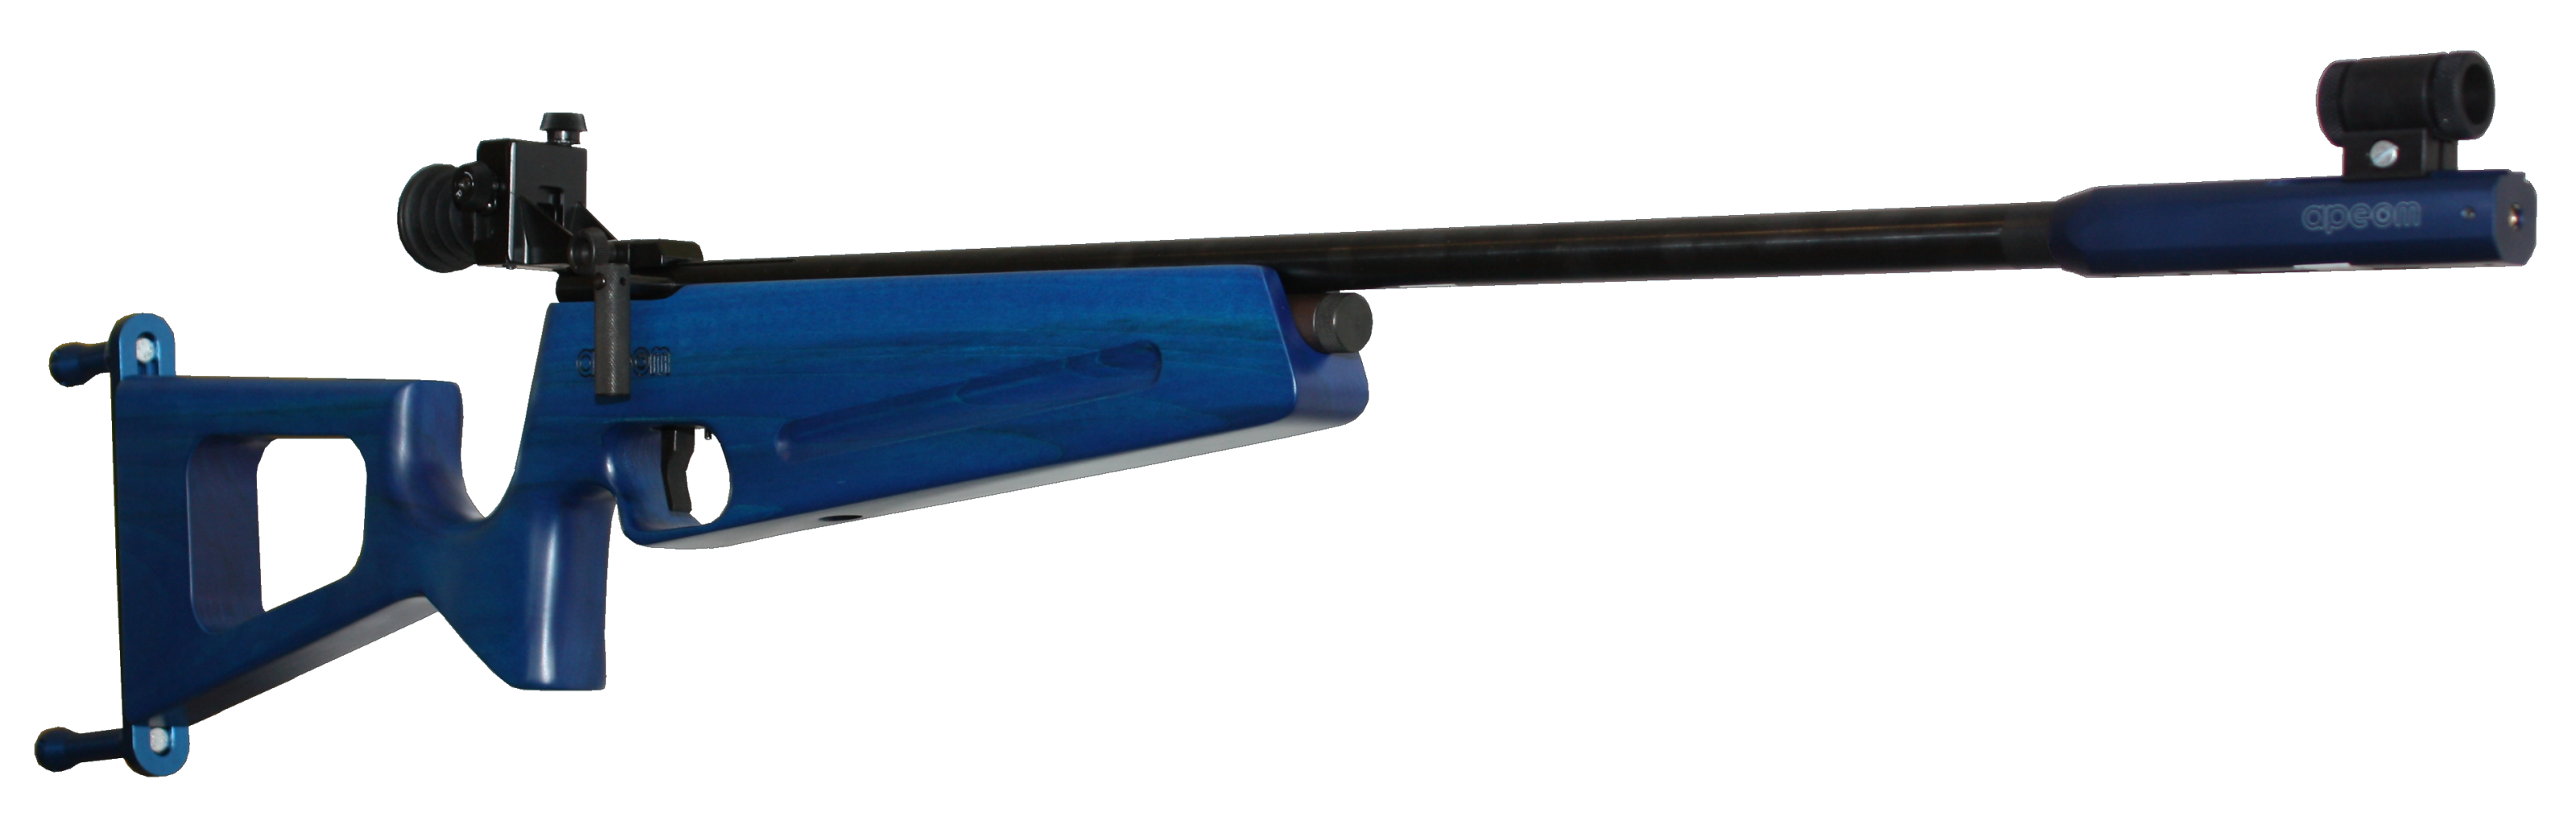 Laser Rifle E-Gun 103 - 